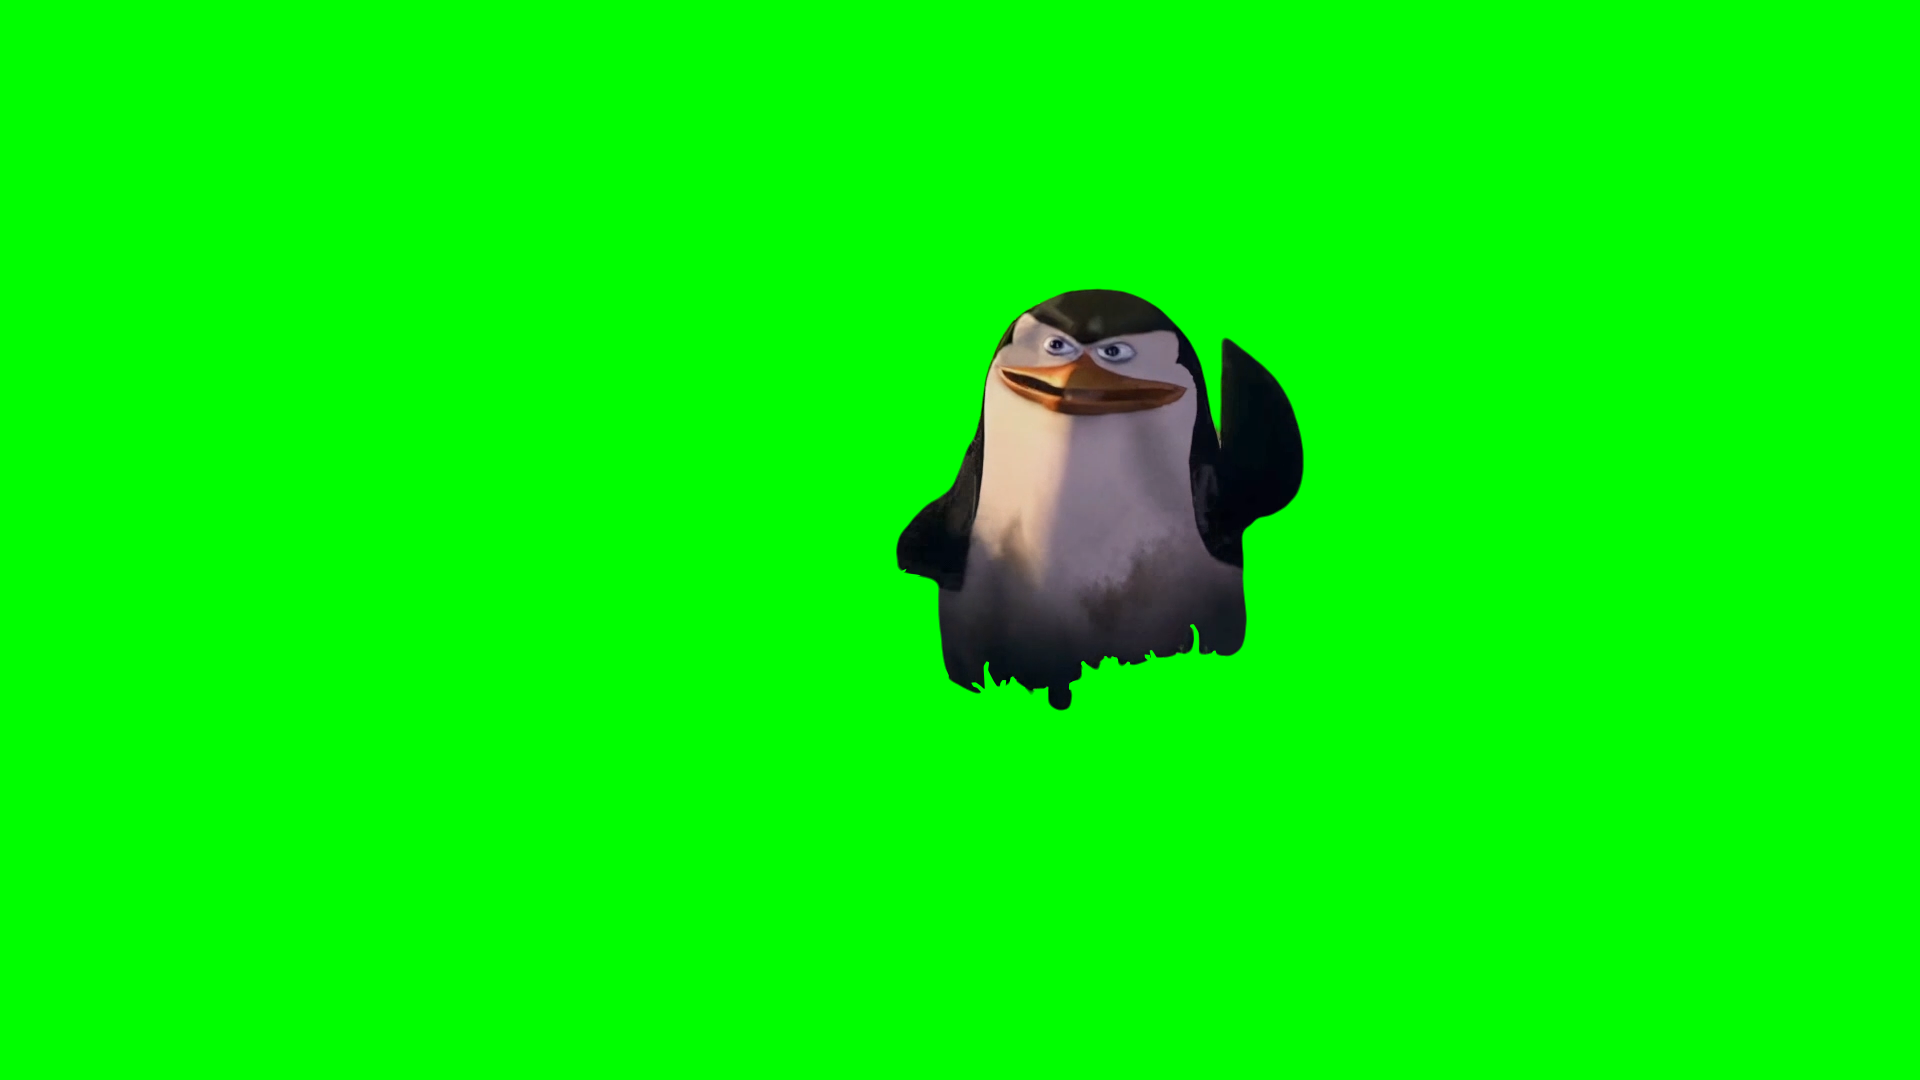 Madagascar - You Didn't See Anything! - Skipper Penguin meme (Green Screen)